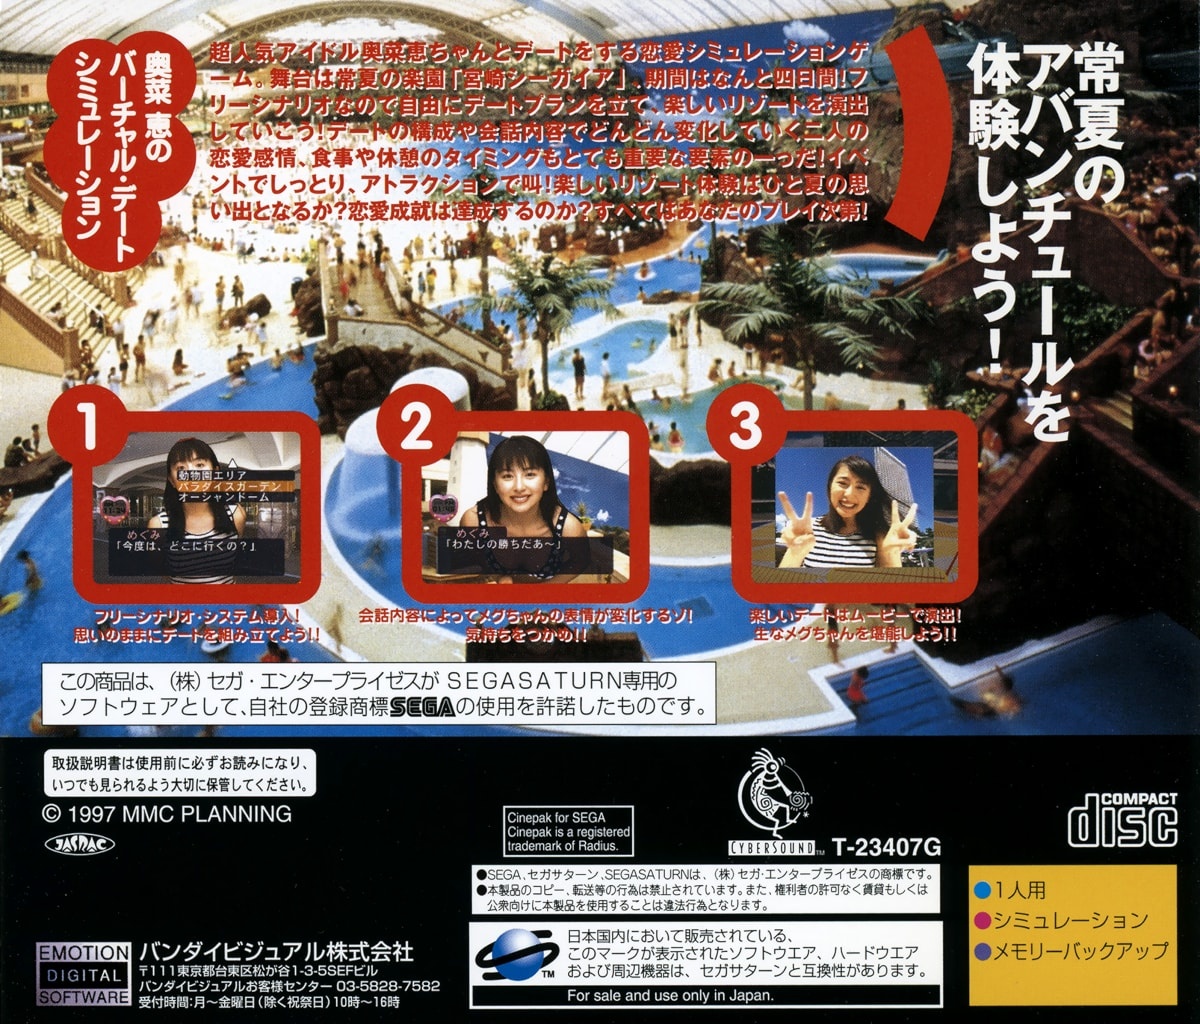 Capa do jogo Koi no Summer Fantasy: in Miyazaki Seagaia